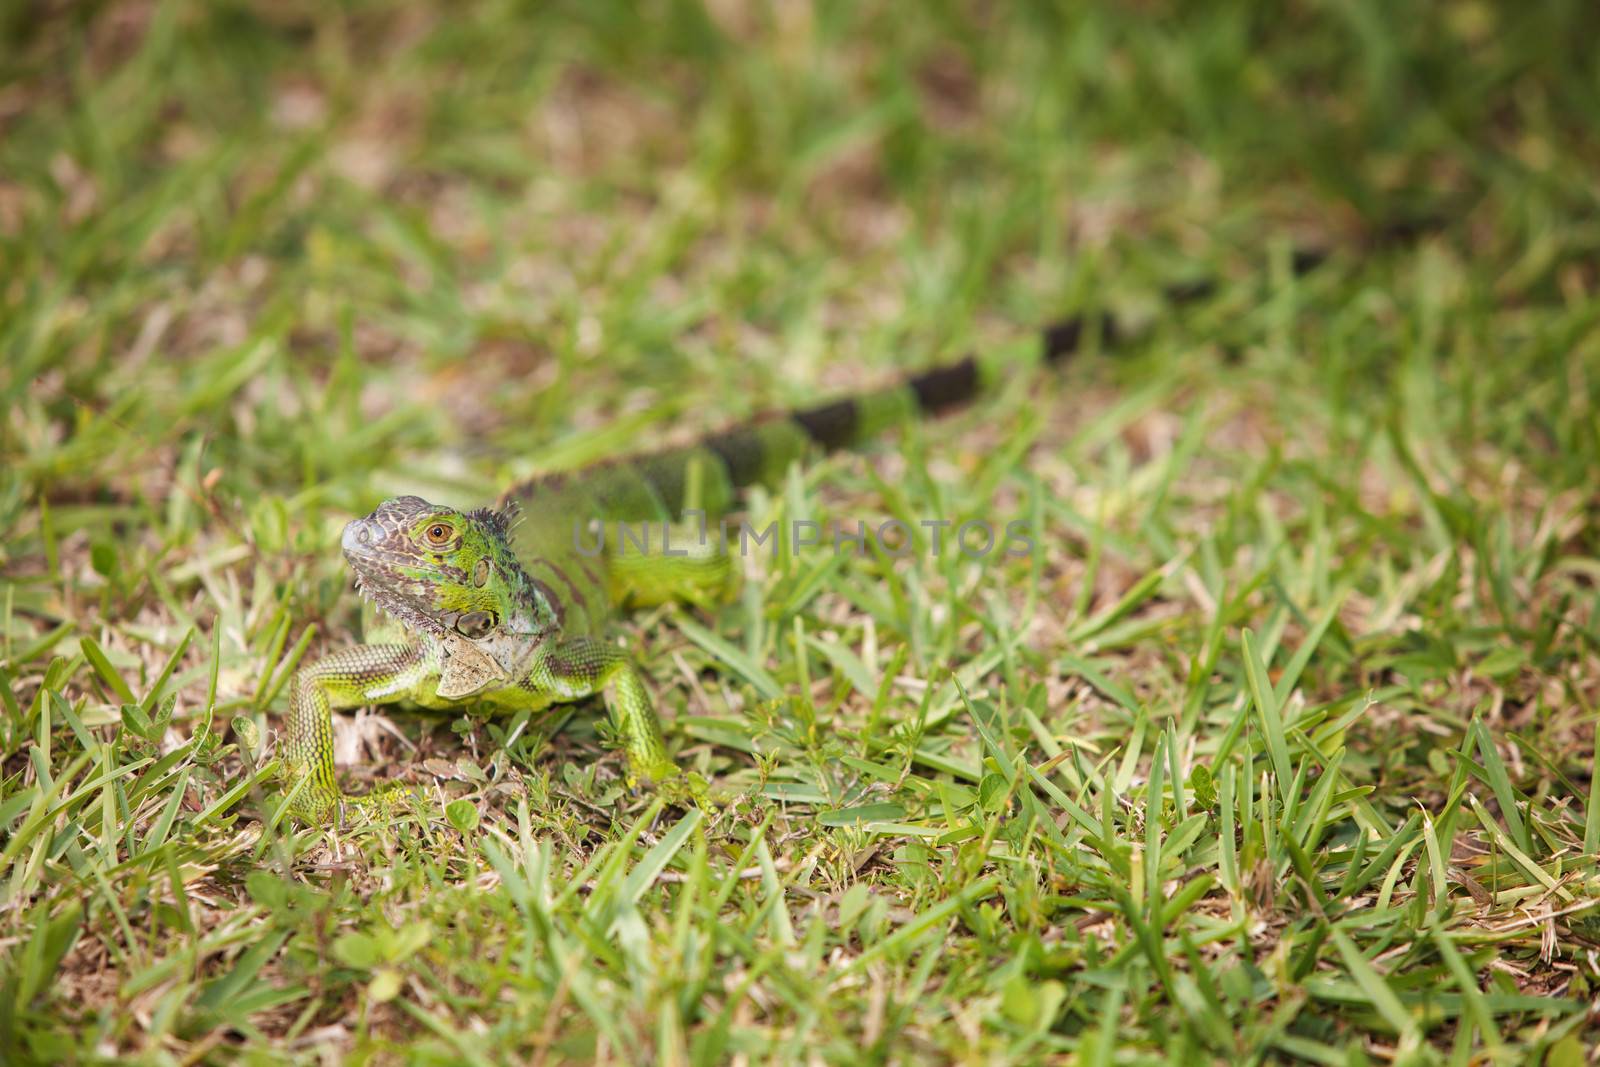 Curious Green carribean Iguana well camoflauged in grass